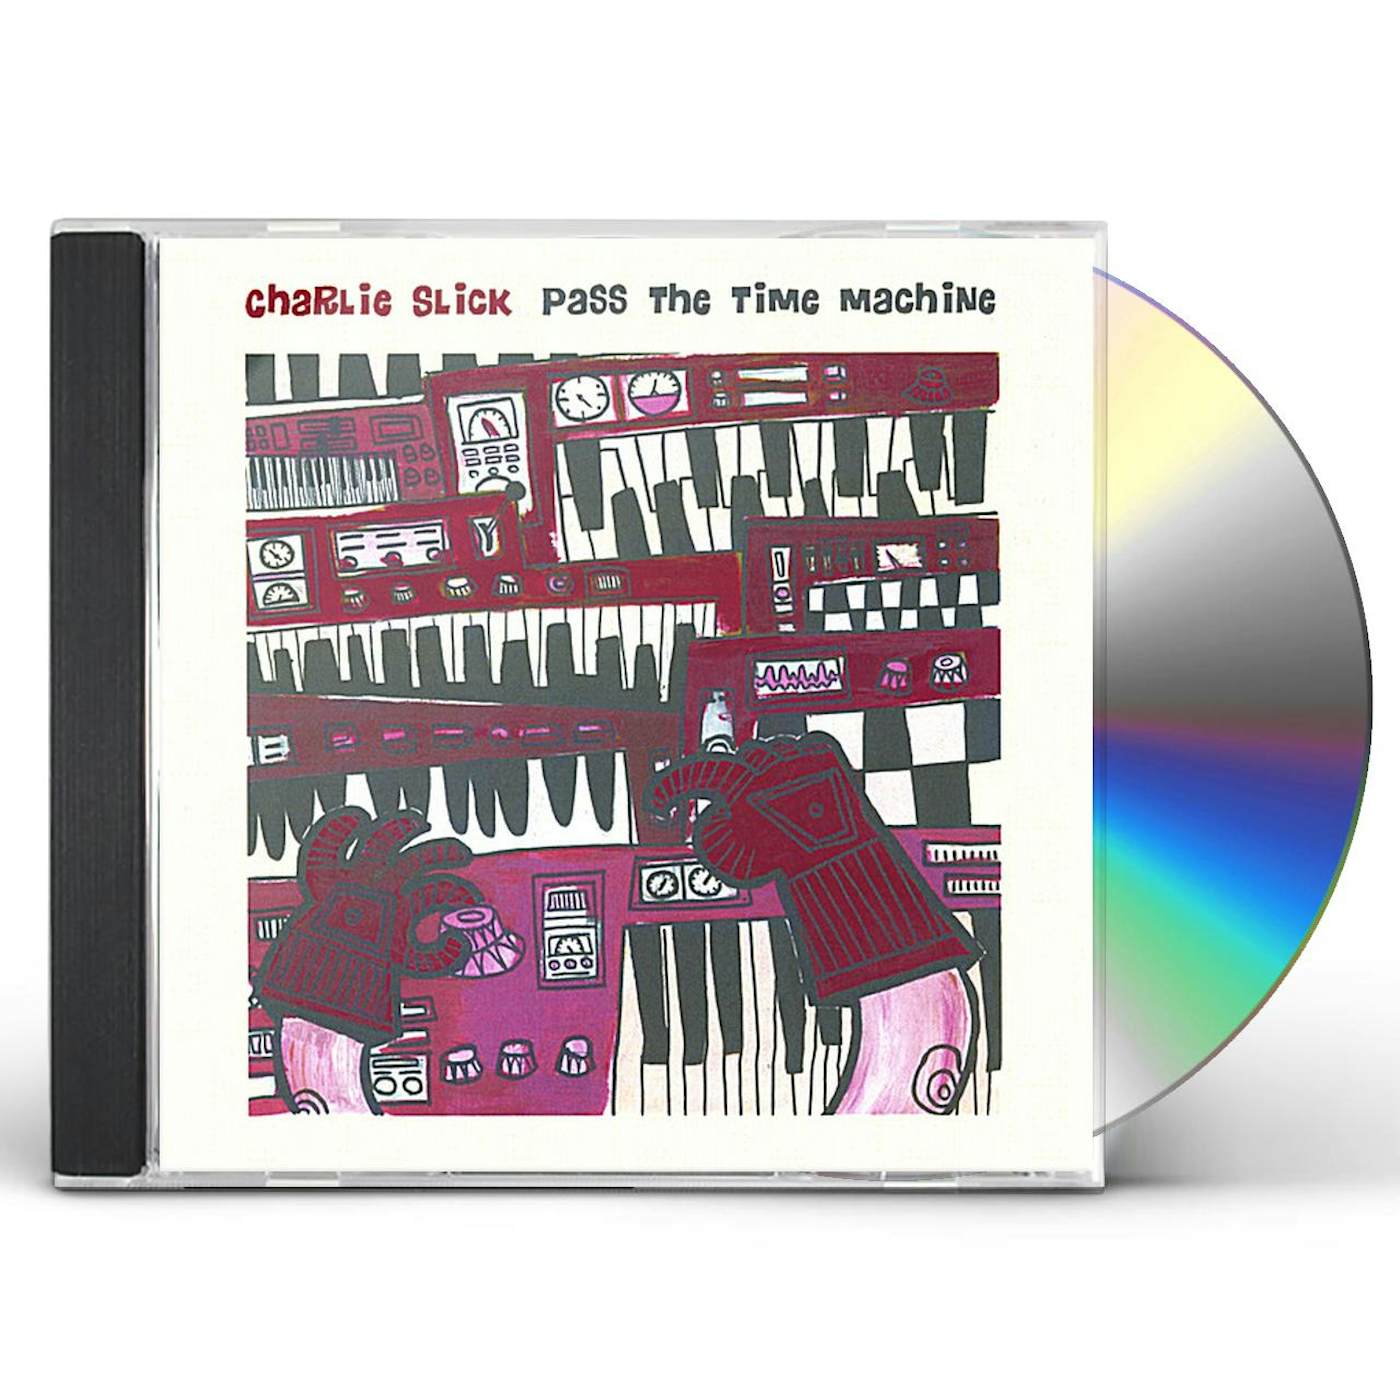 Charlie Slick PASS THE TIME MACHINE CD